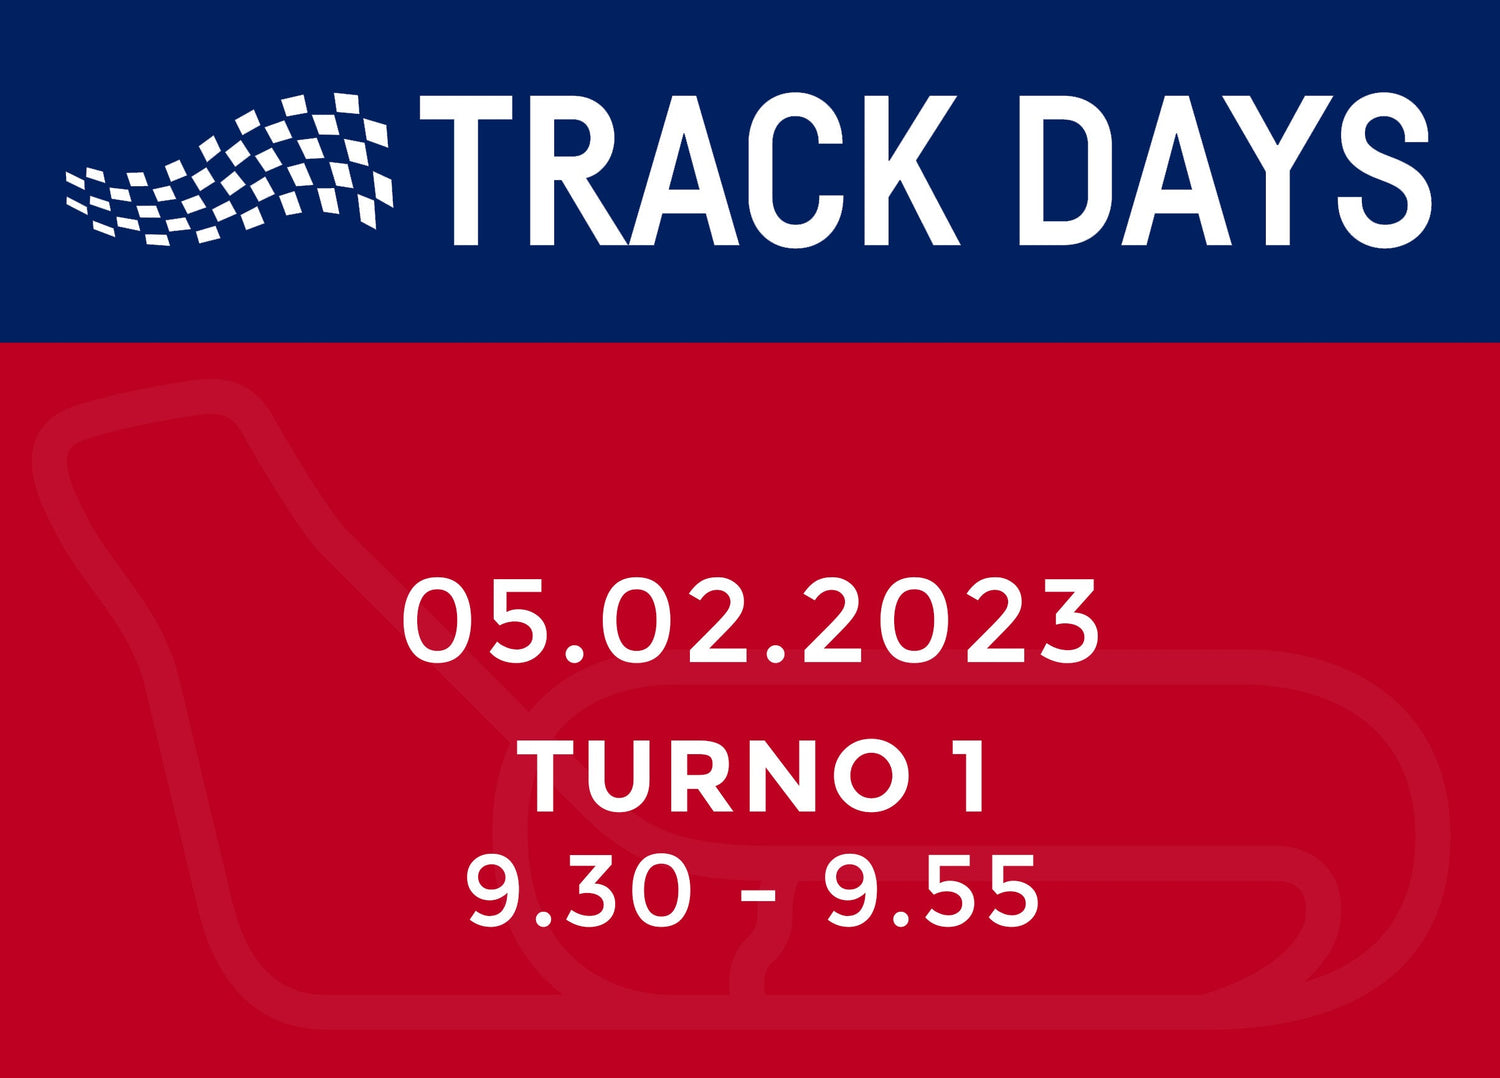 TRACK DAYS 05.02.23 TURNO 1